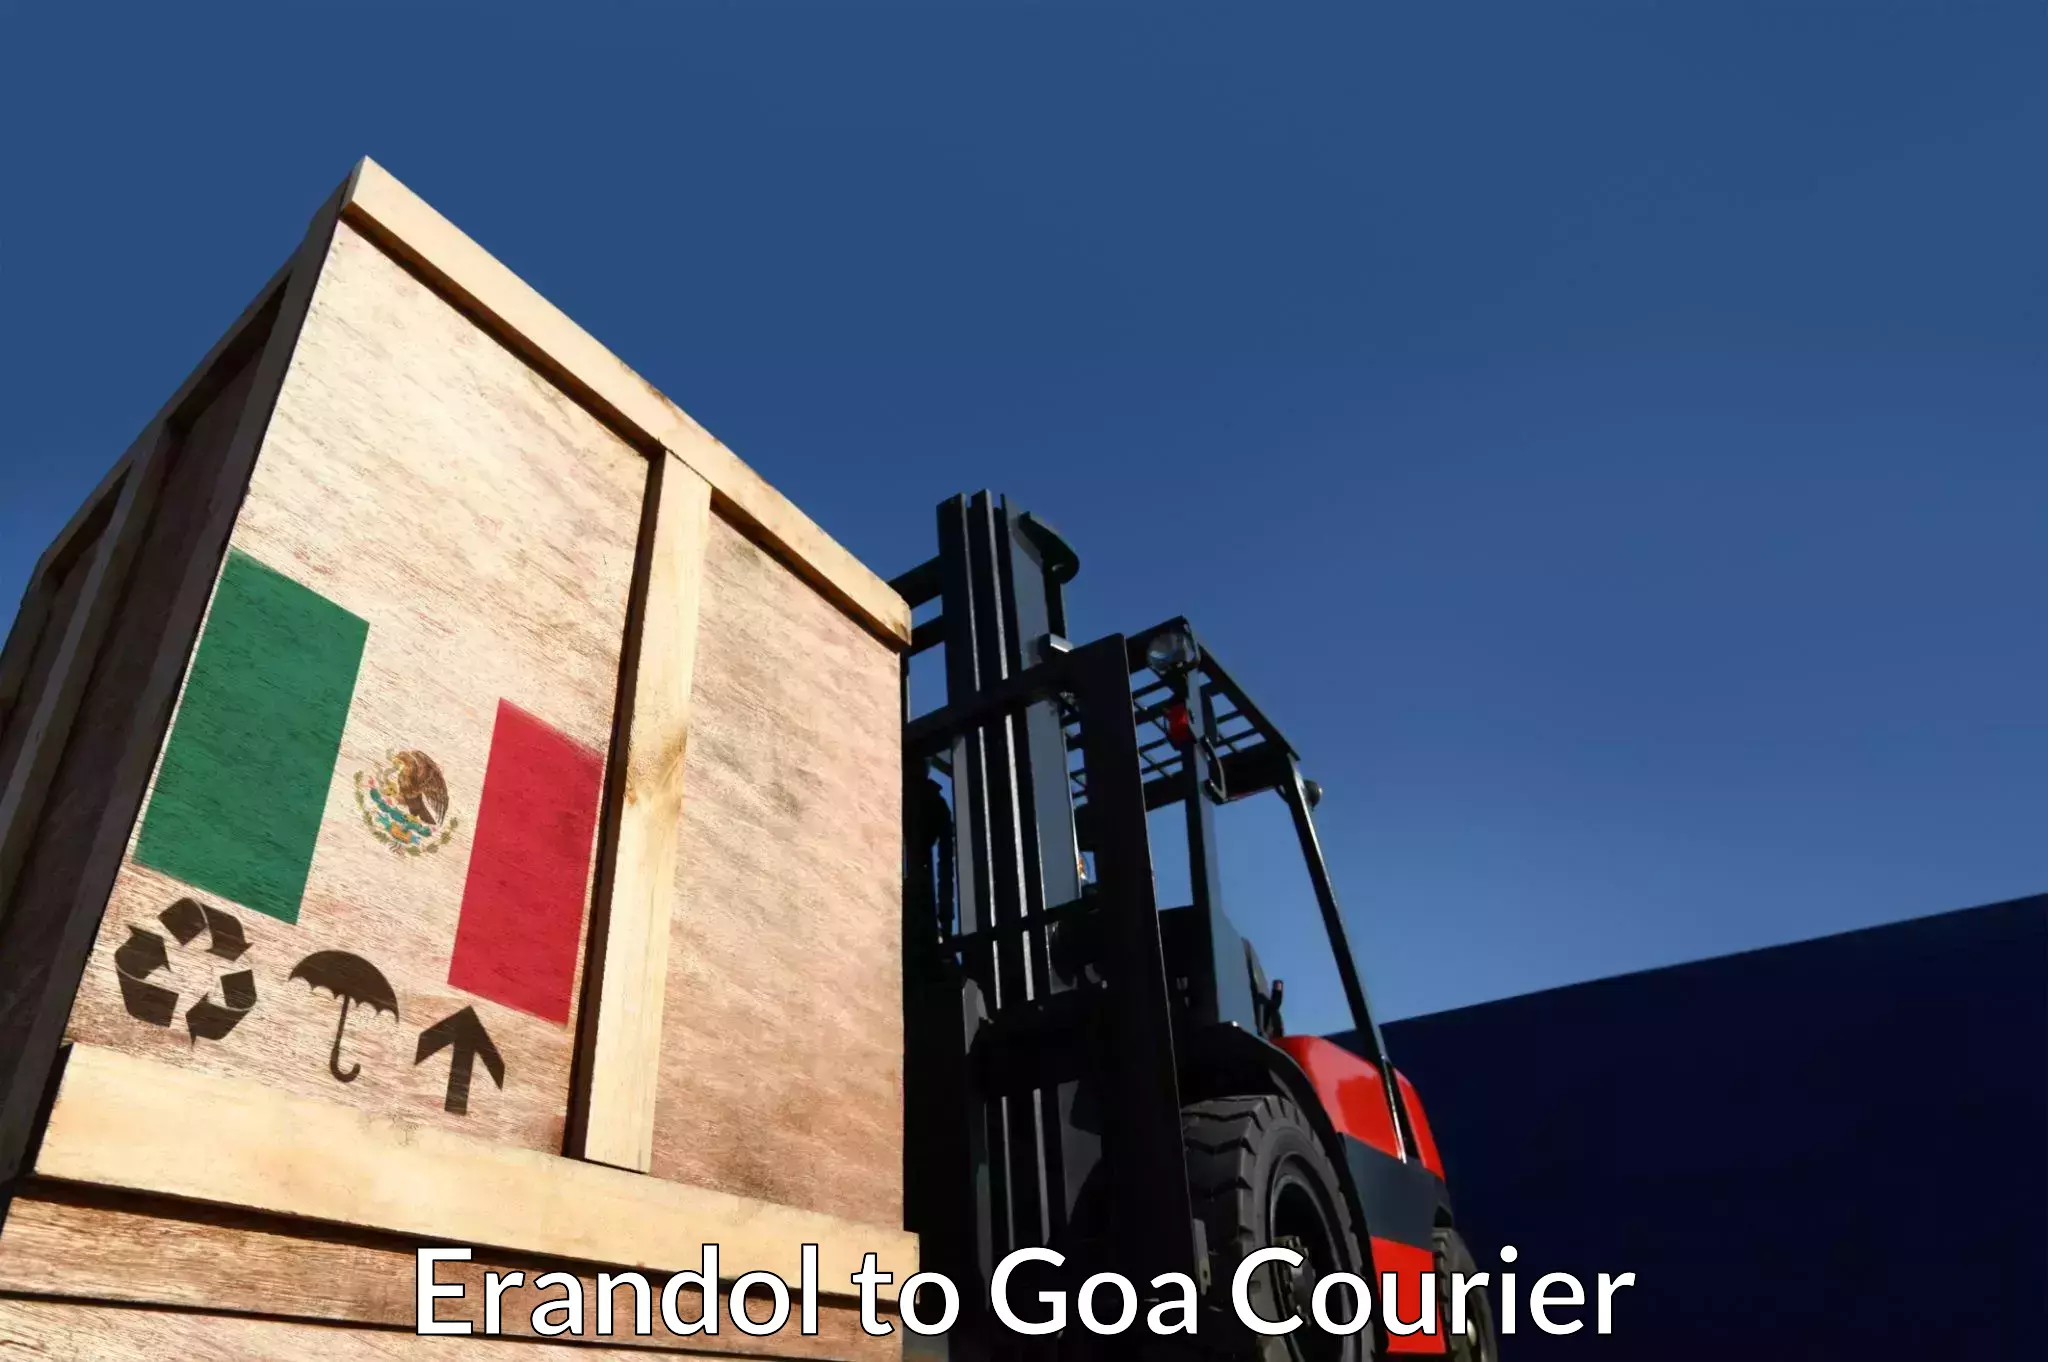 24/7 courier service in Erandol to Goa